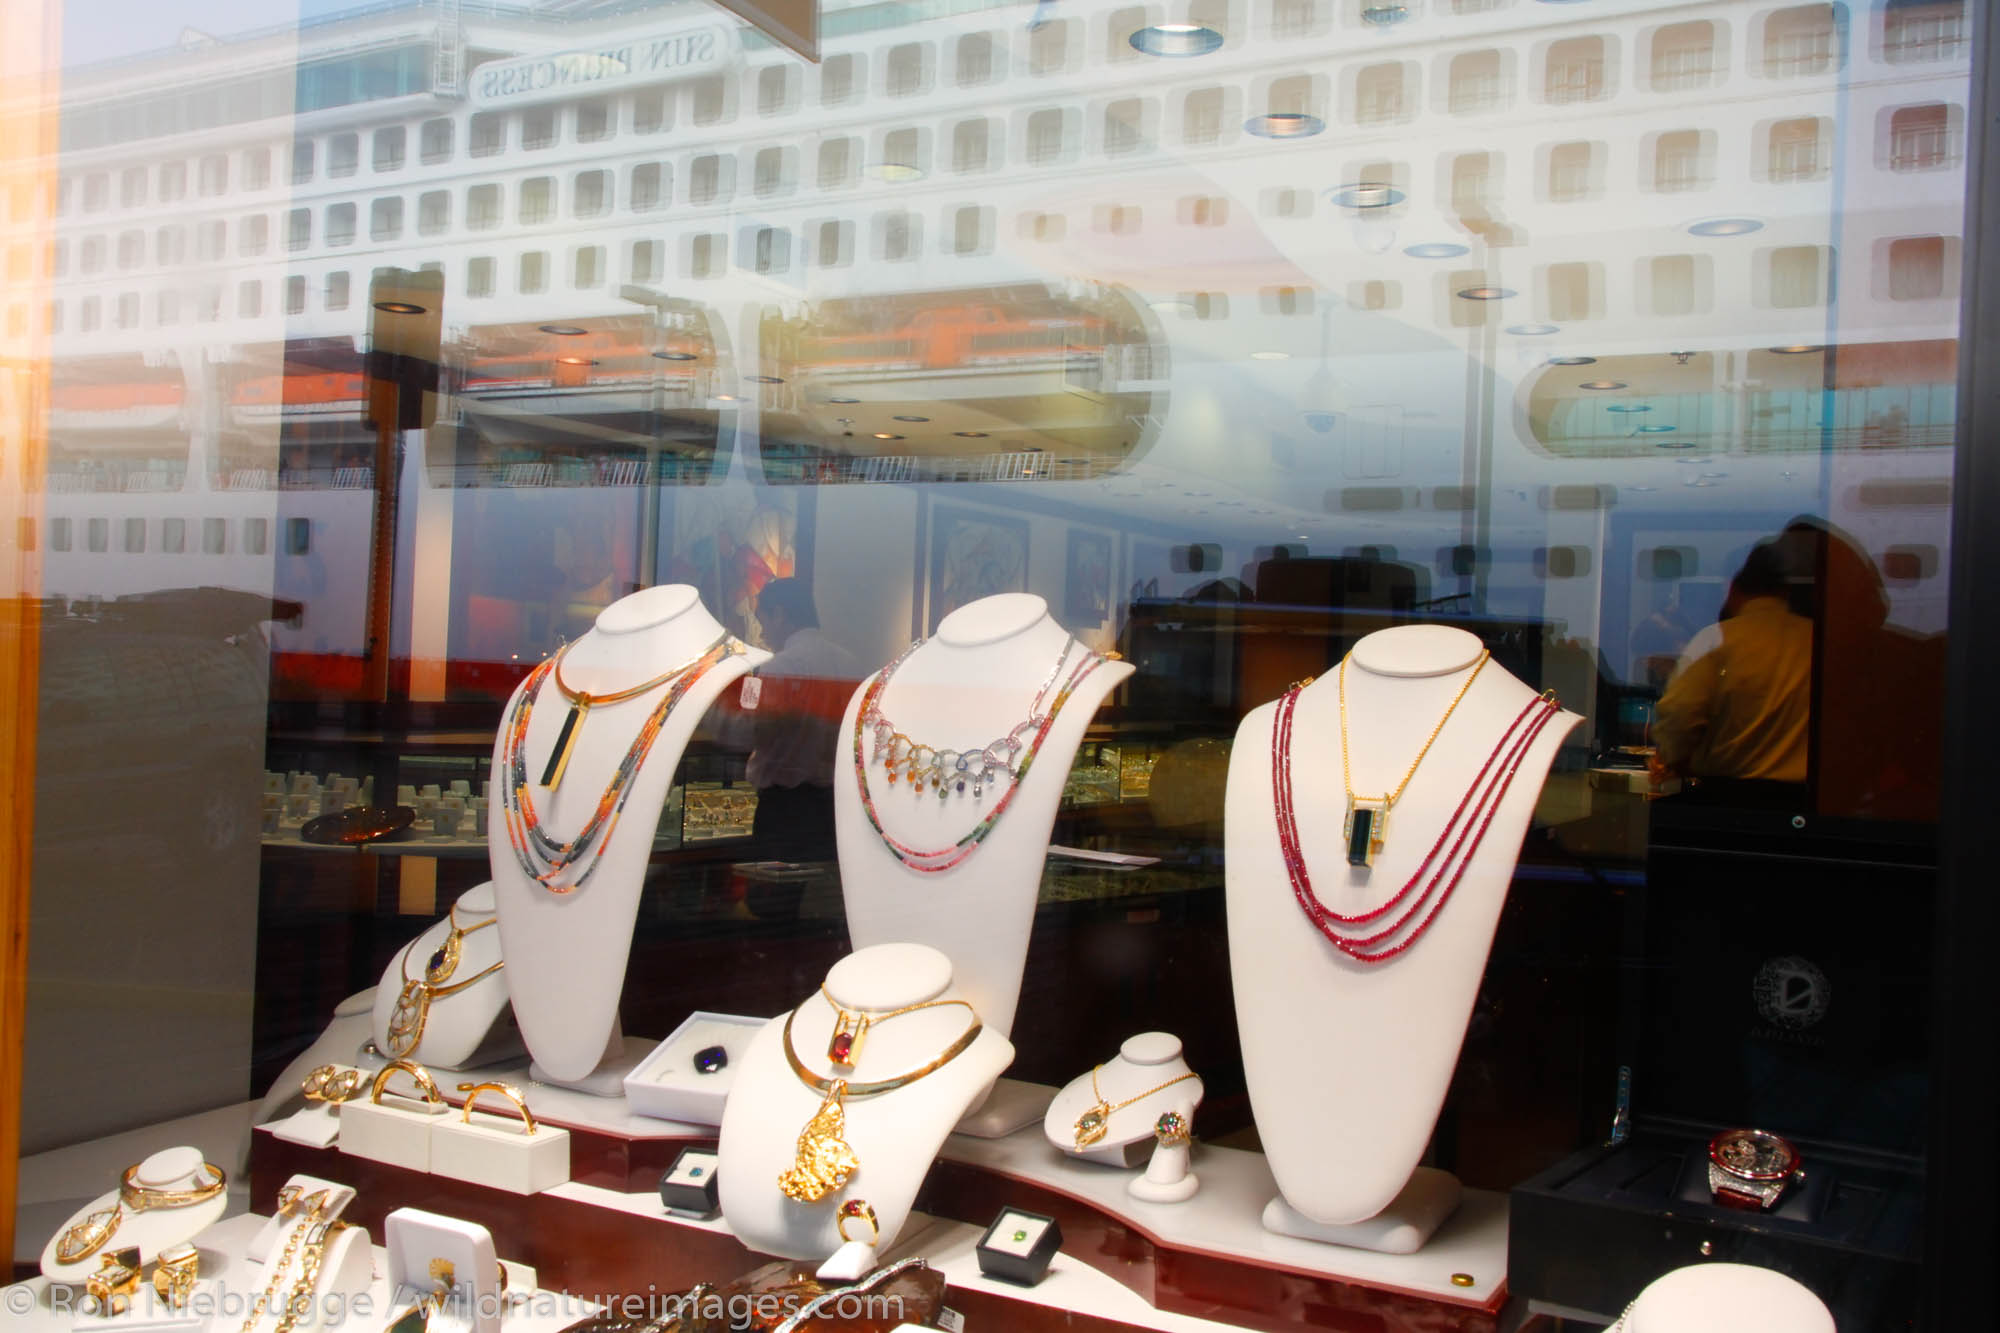 Cruiseship reflected in the window of a jewelry store, Ketchikan, Alaska